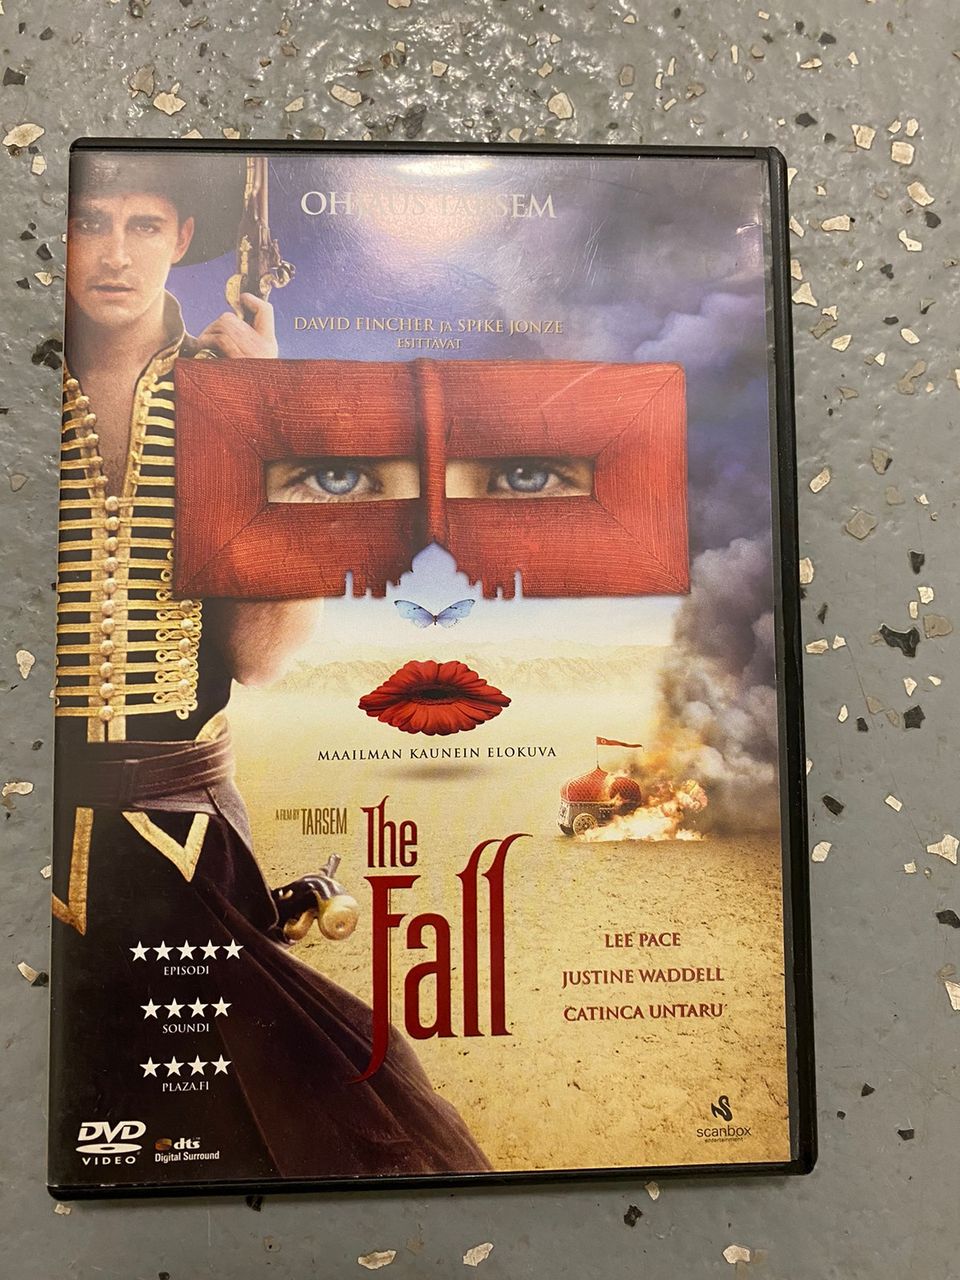 The fall dvd